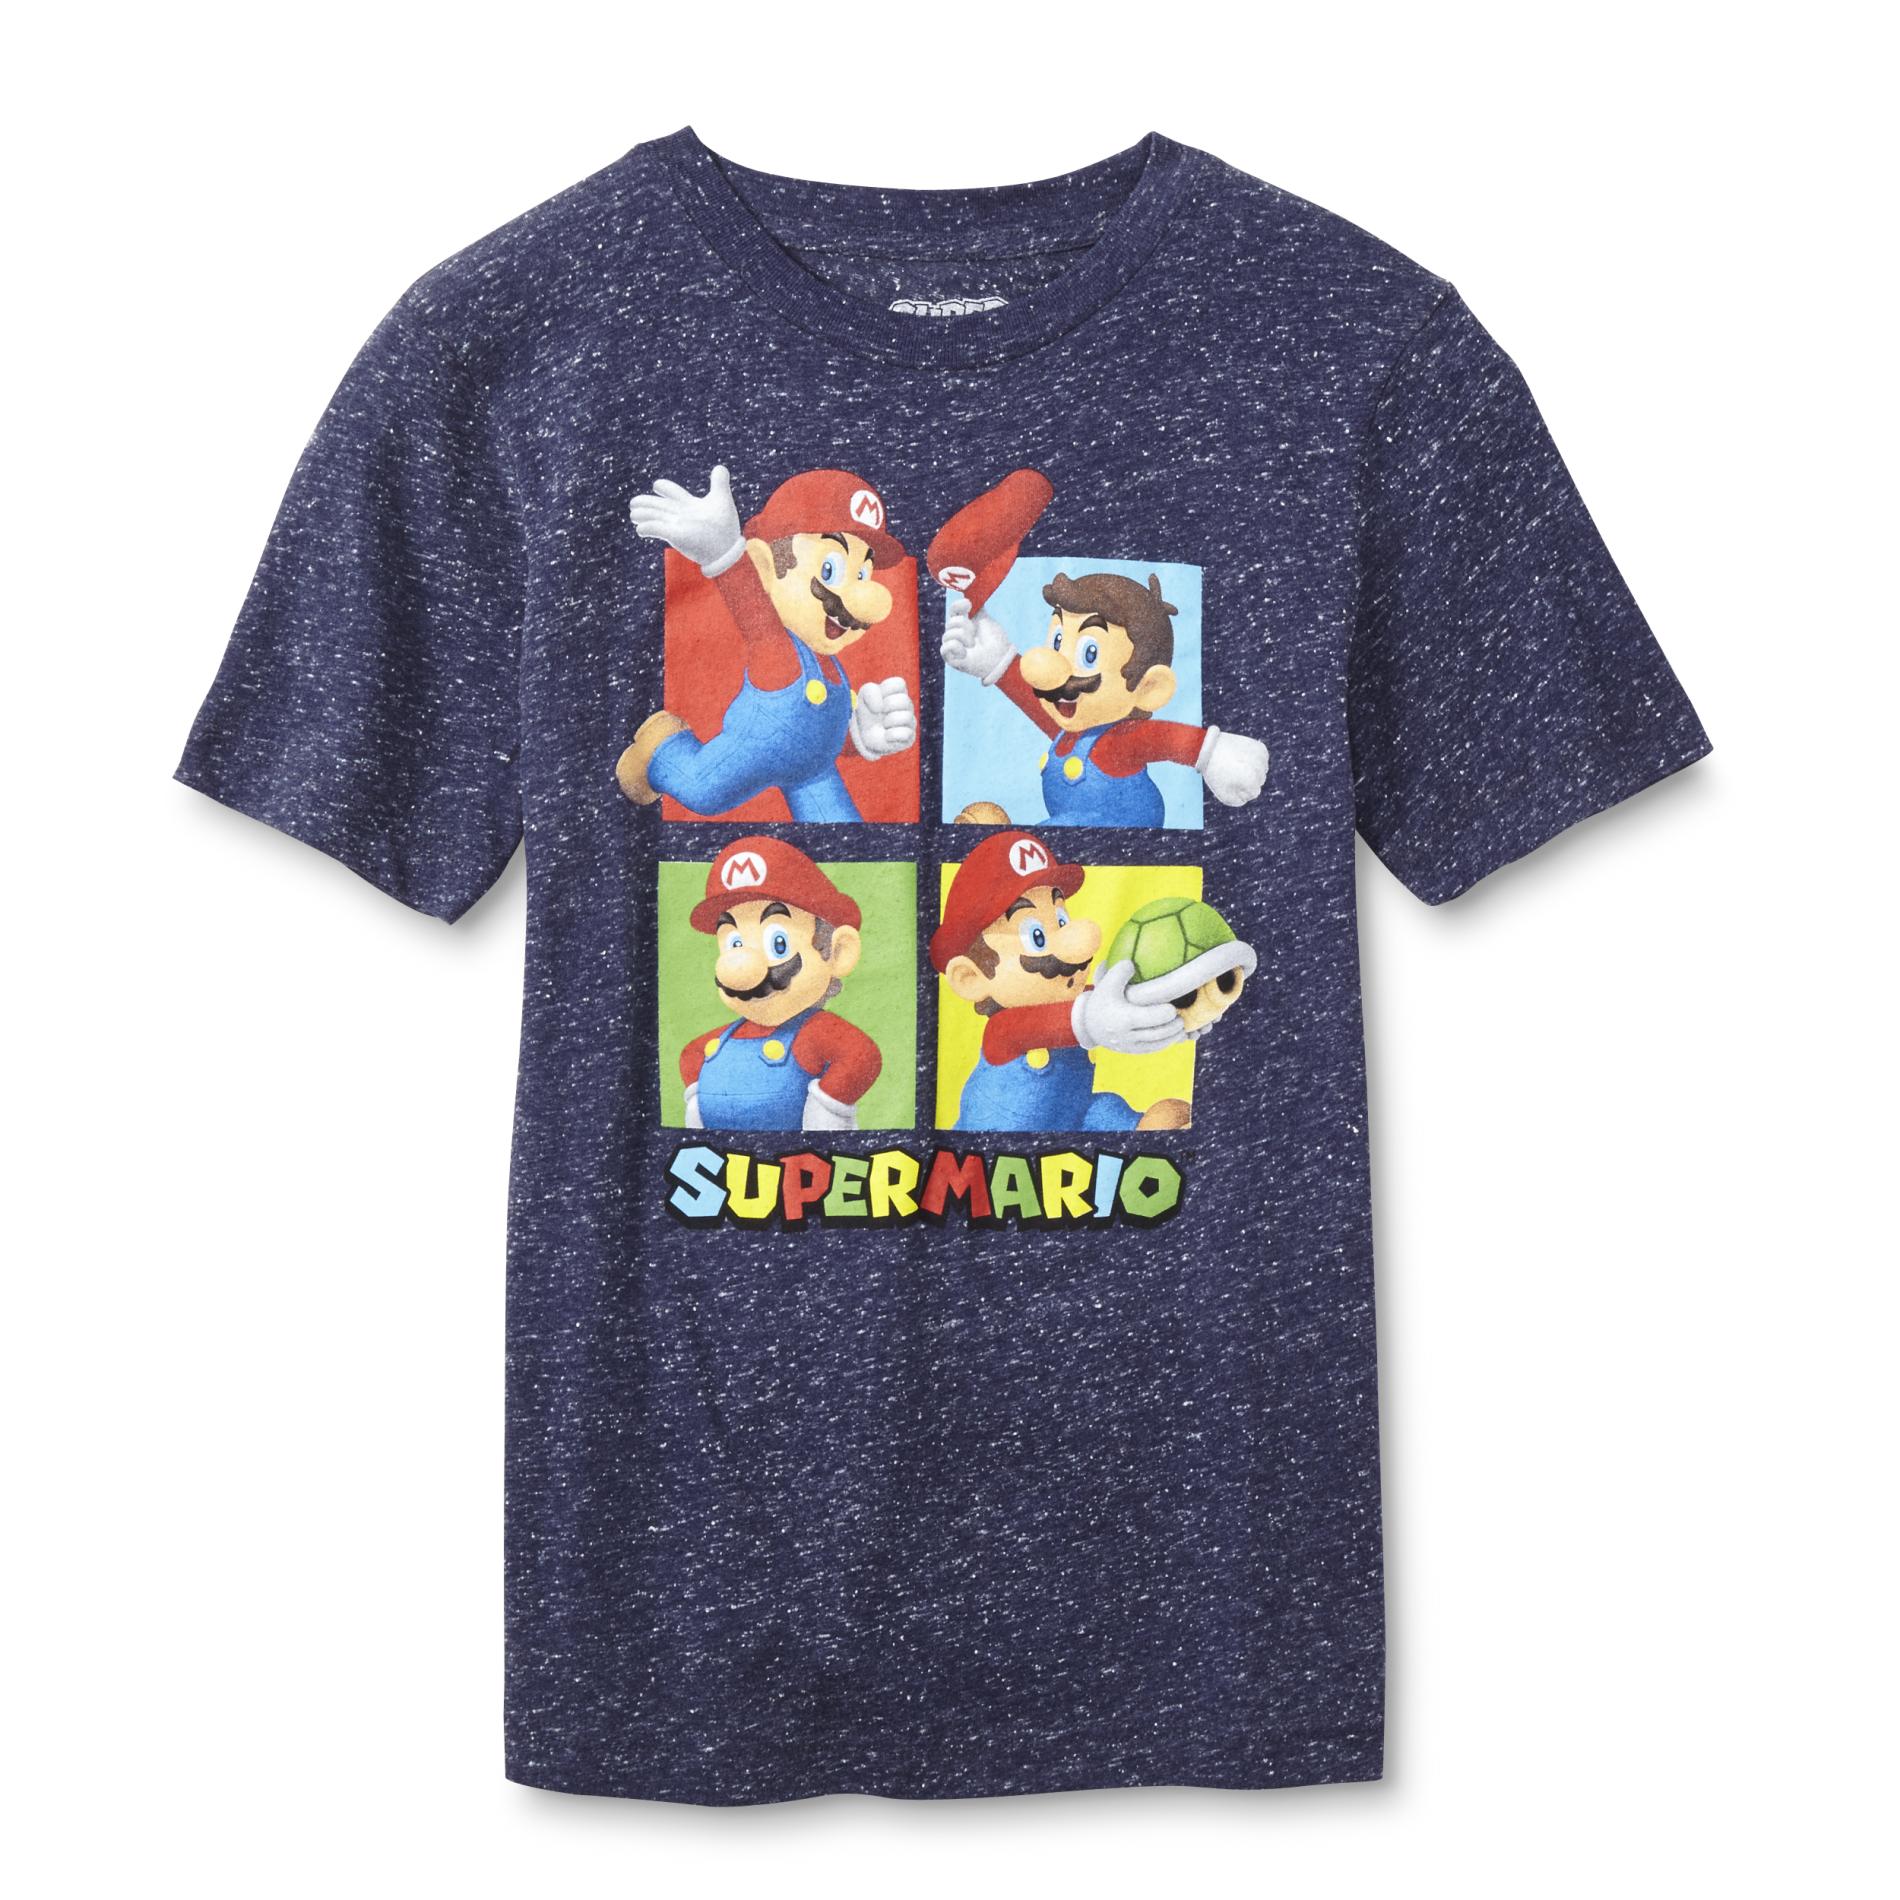 Nintendo Super Mario Boys' Graphic T-Shirt - Speckled